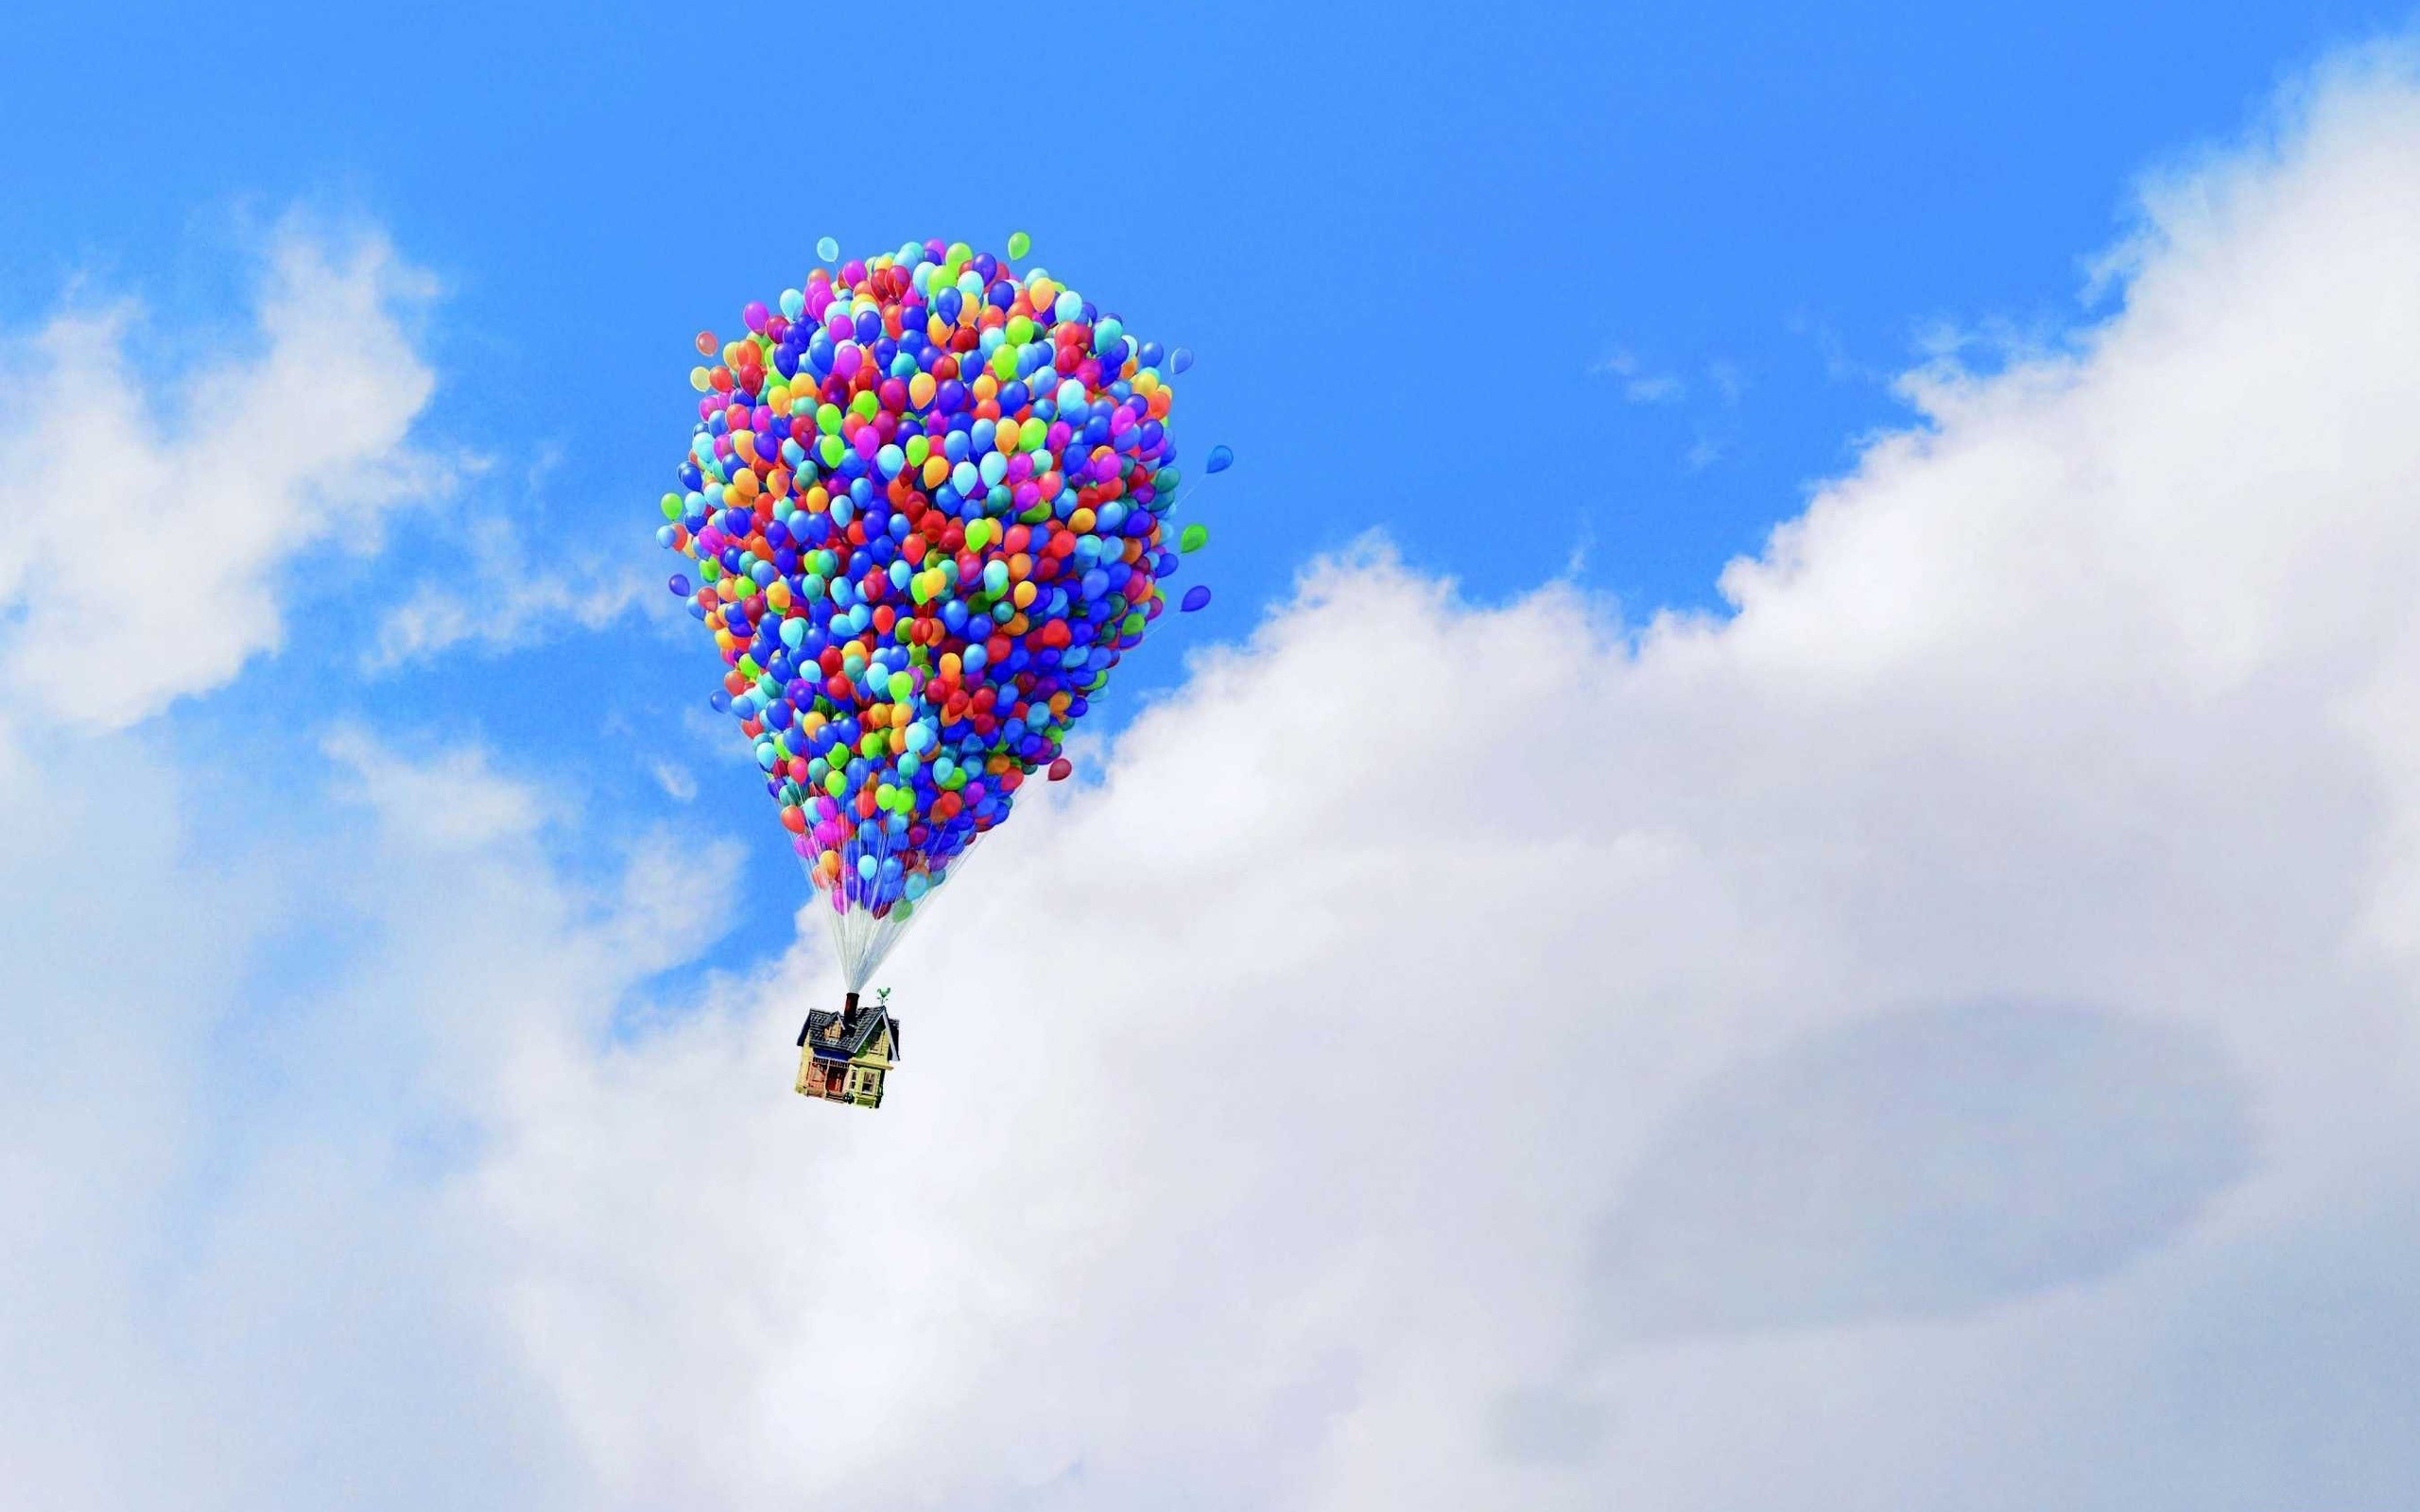 2560x1600 Up Wallpaper, Up, pixar, Pixar, animation, balloons, house, sky